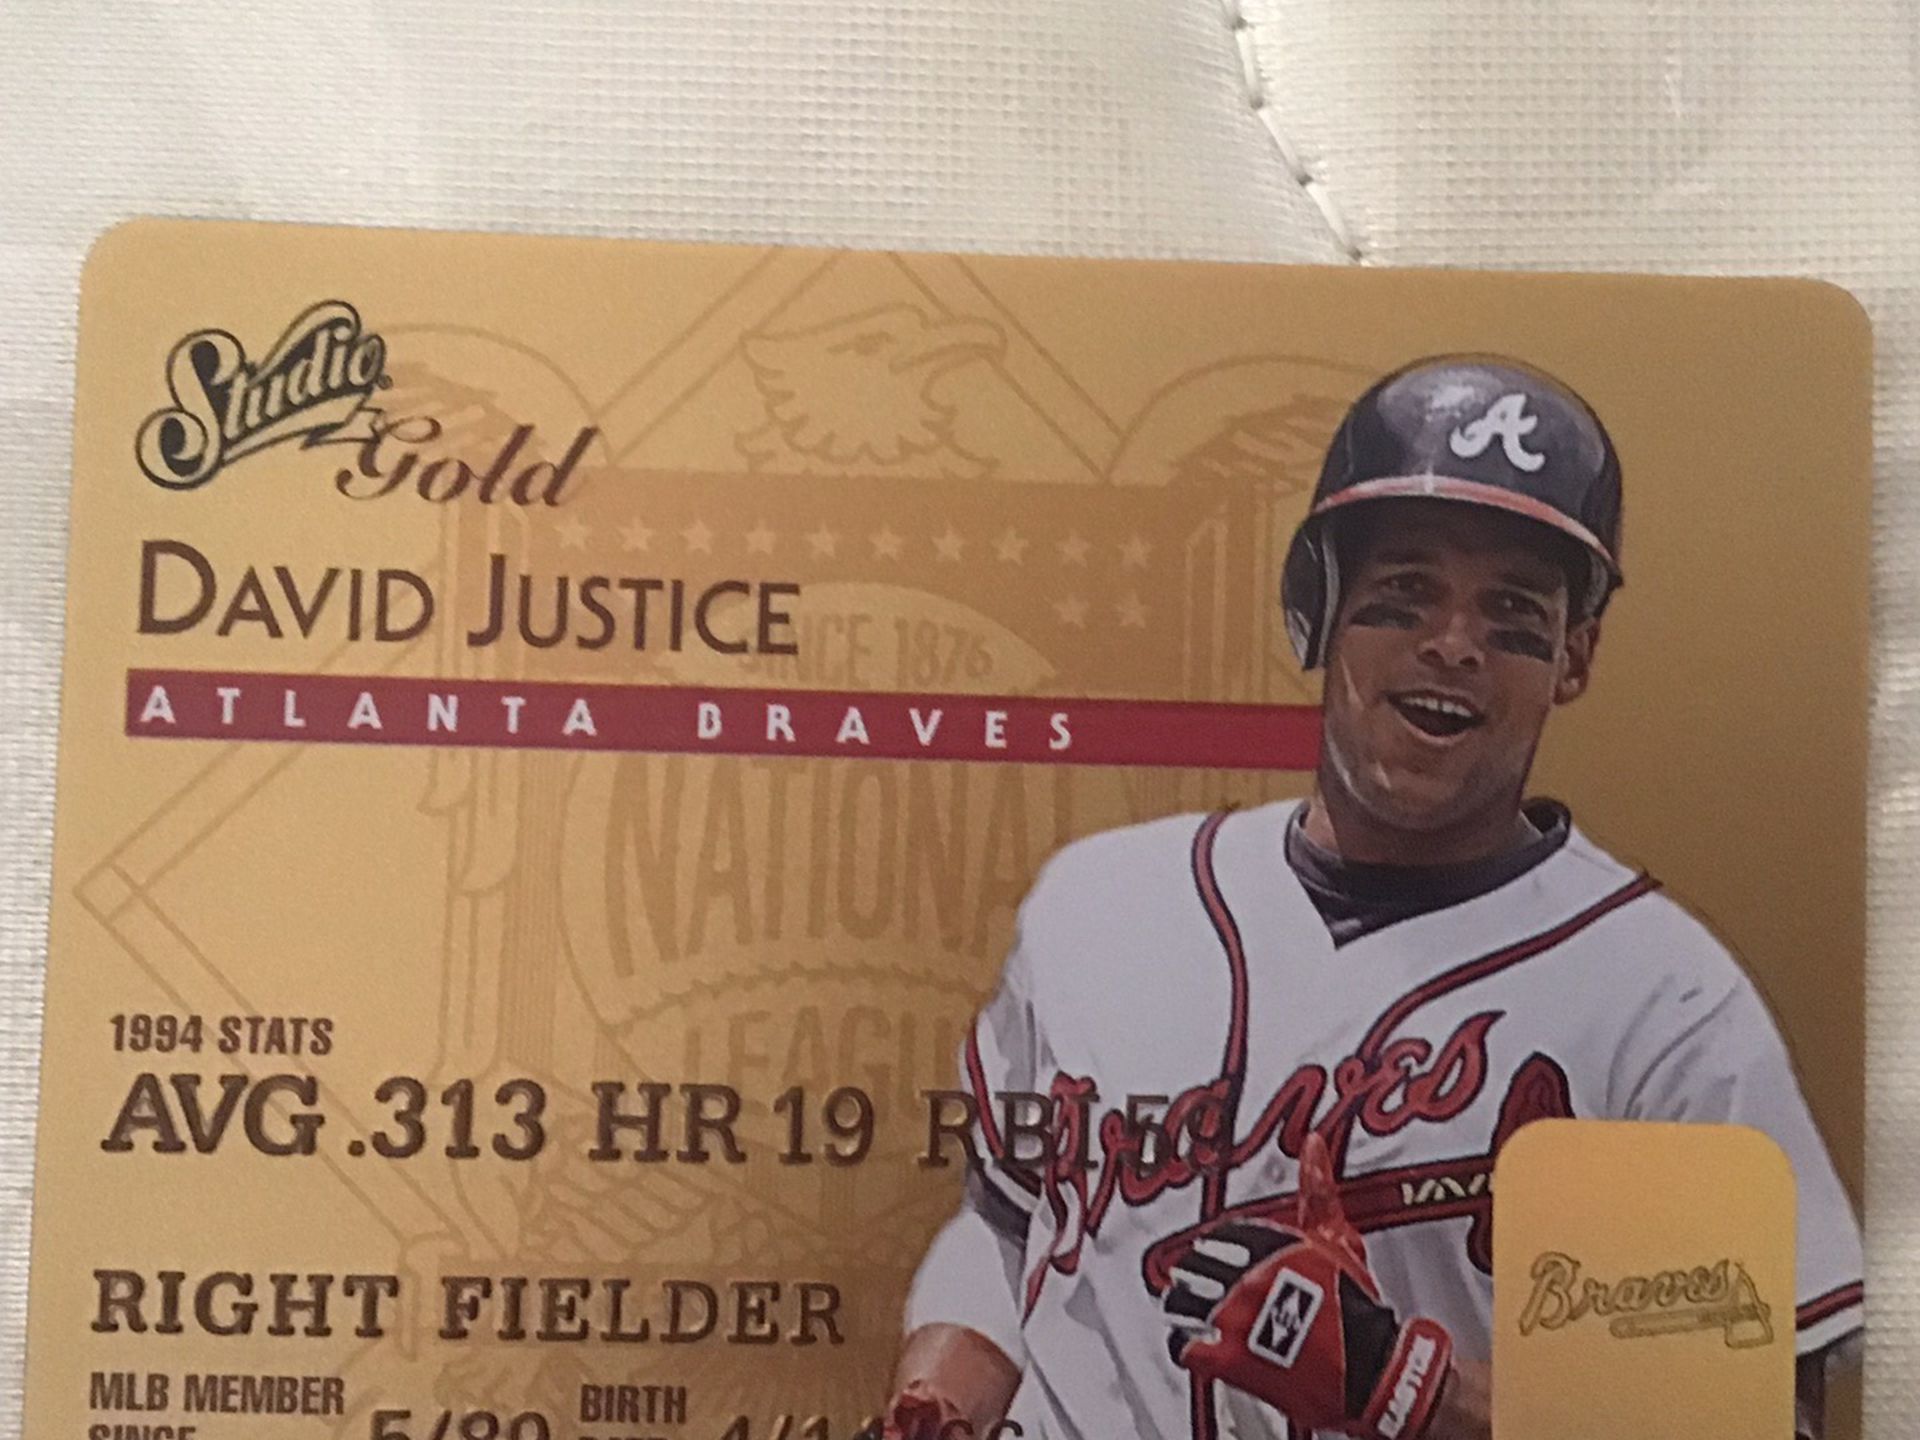 1995 Donruss Studi Gold David Justice Plastic Baseball Card